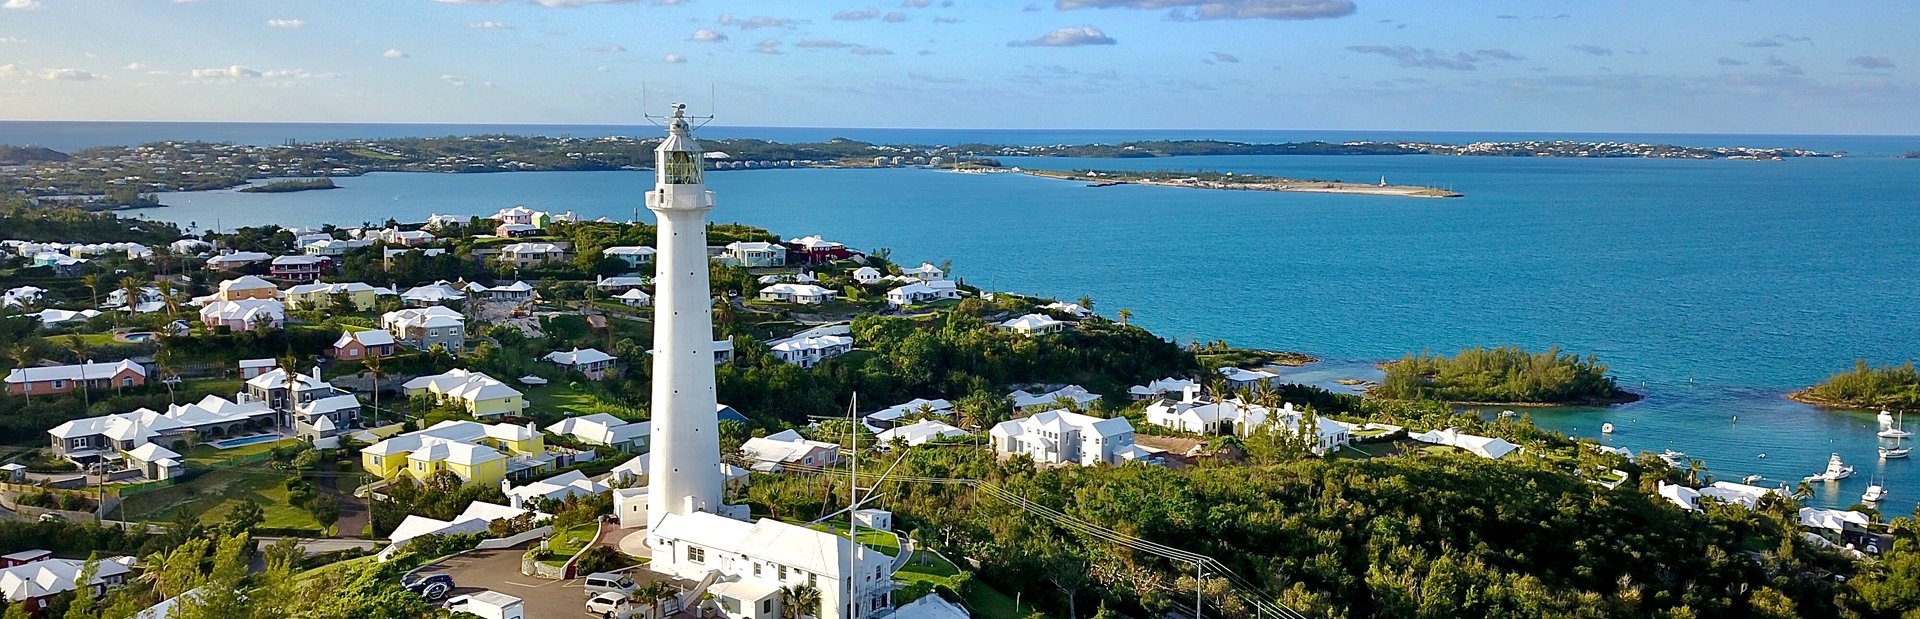 Bermuda photo tour